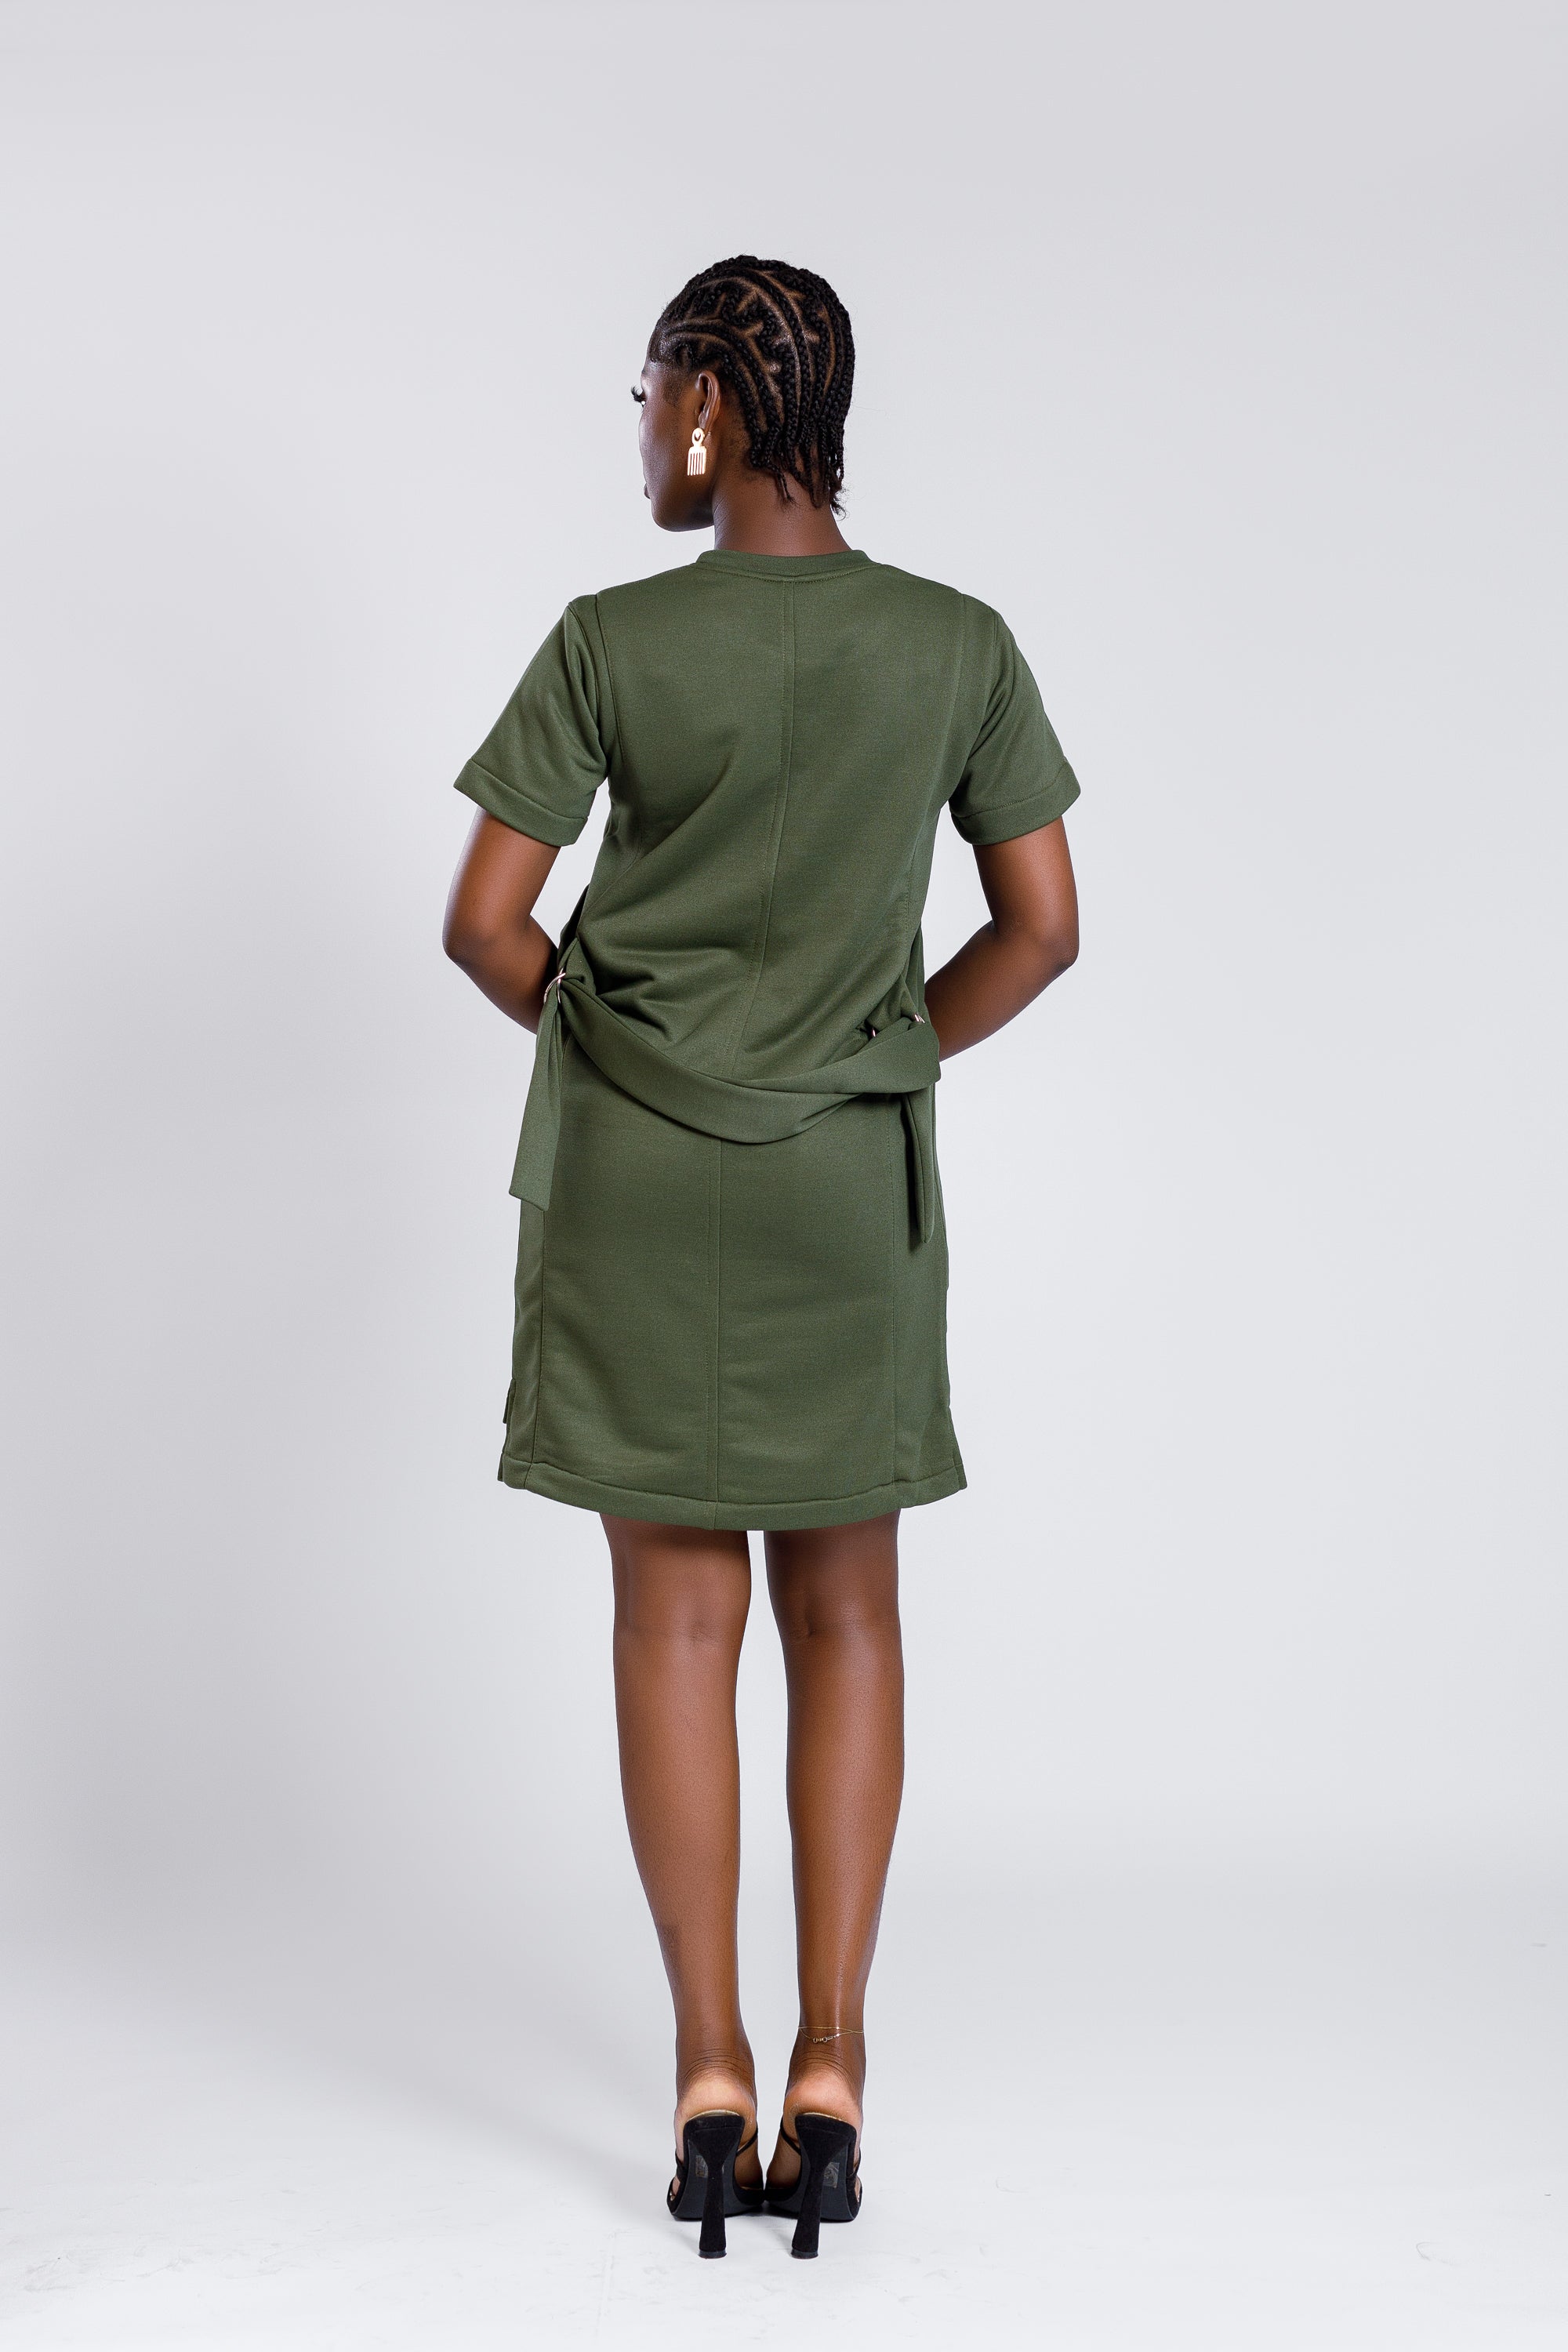 Northlove Dress 2.0 in Green